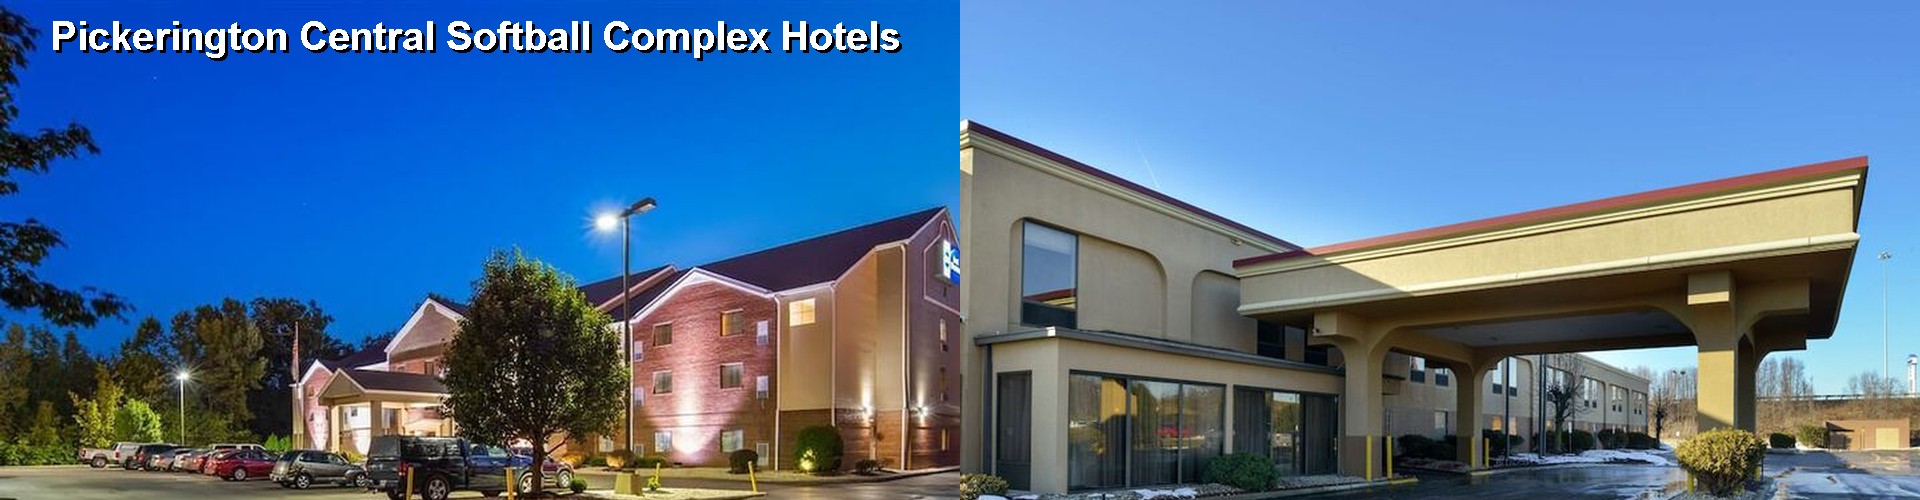 5 Best Hotels near Pickerington Central Softball Complex